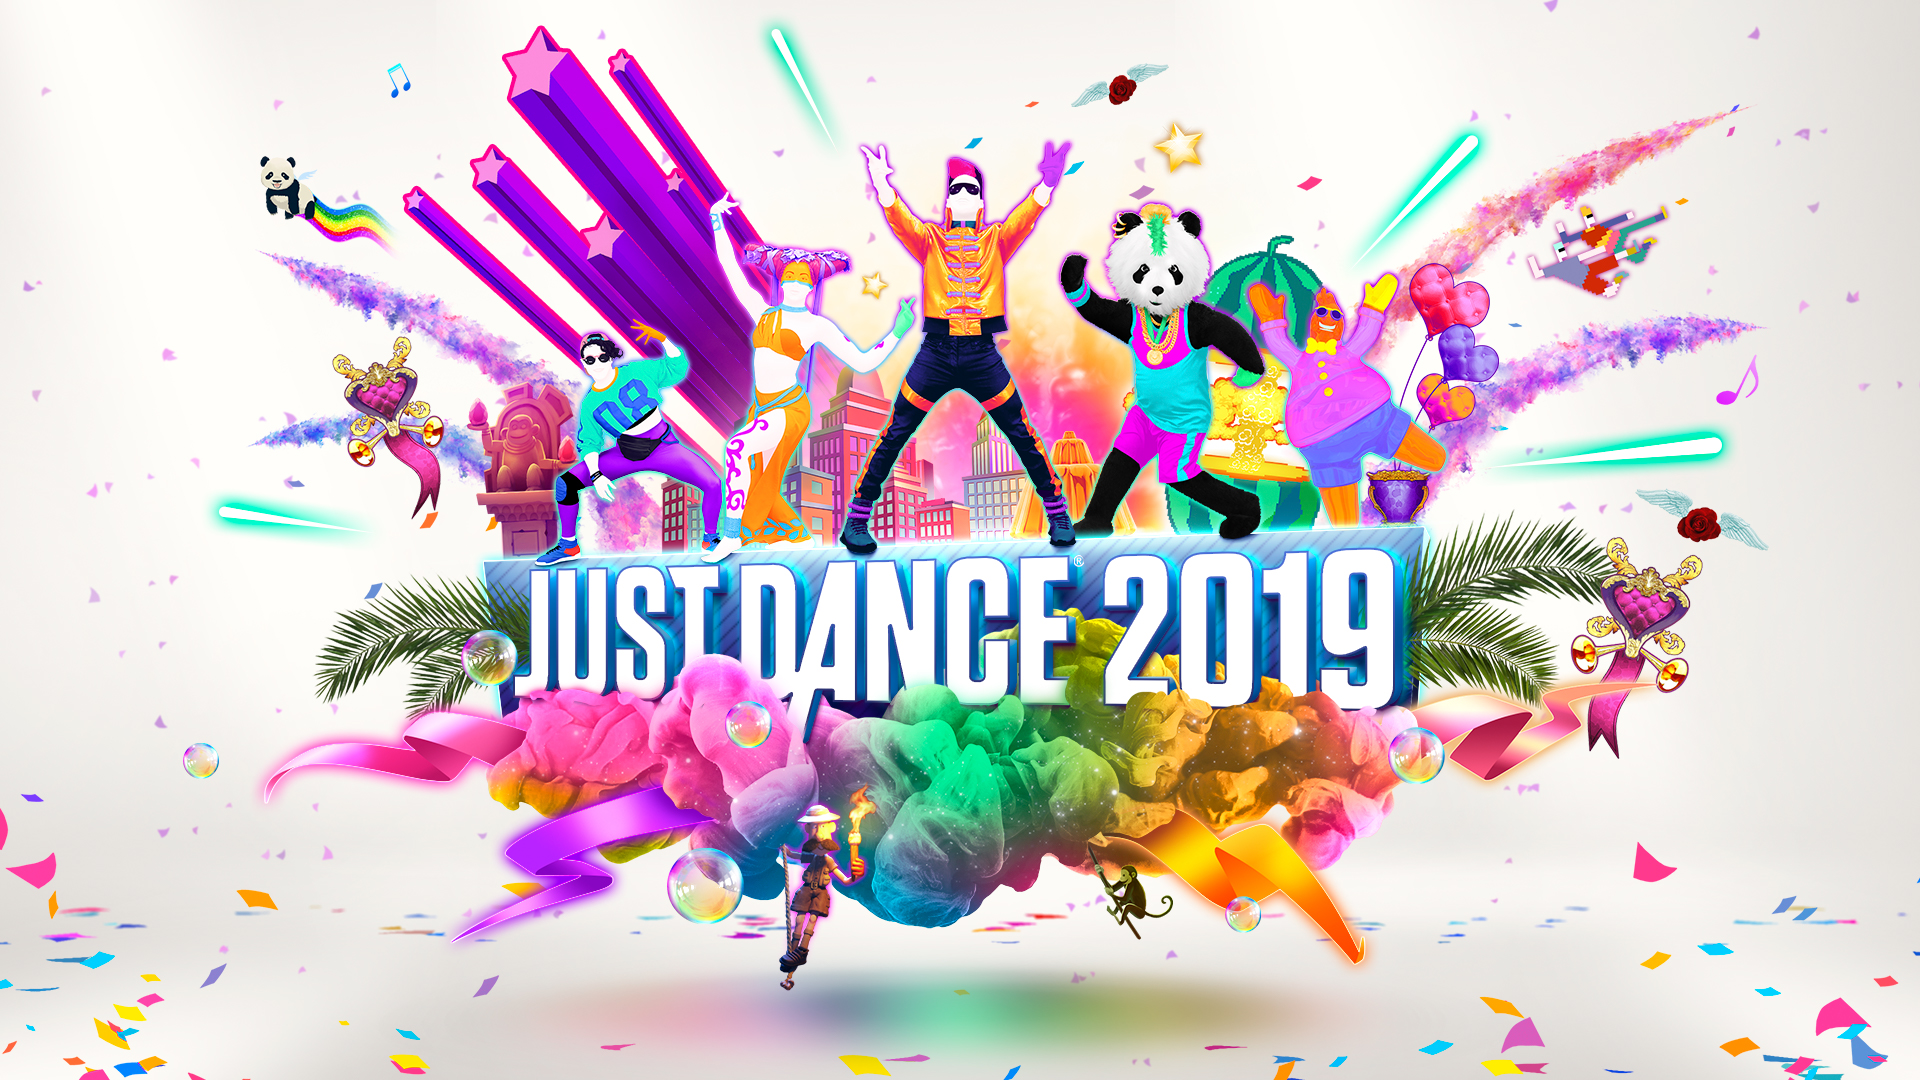 Just Dance 2019 Nintendo Switch Eshop Download